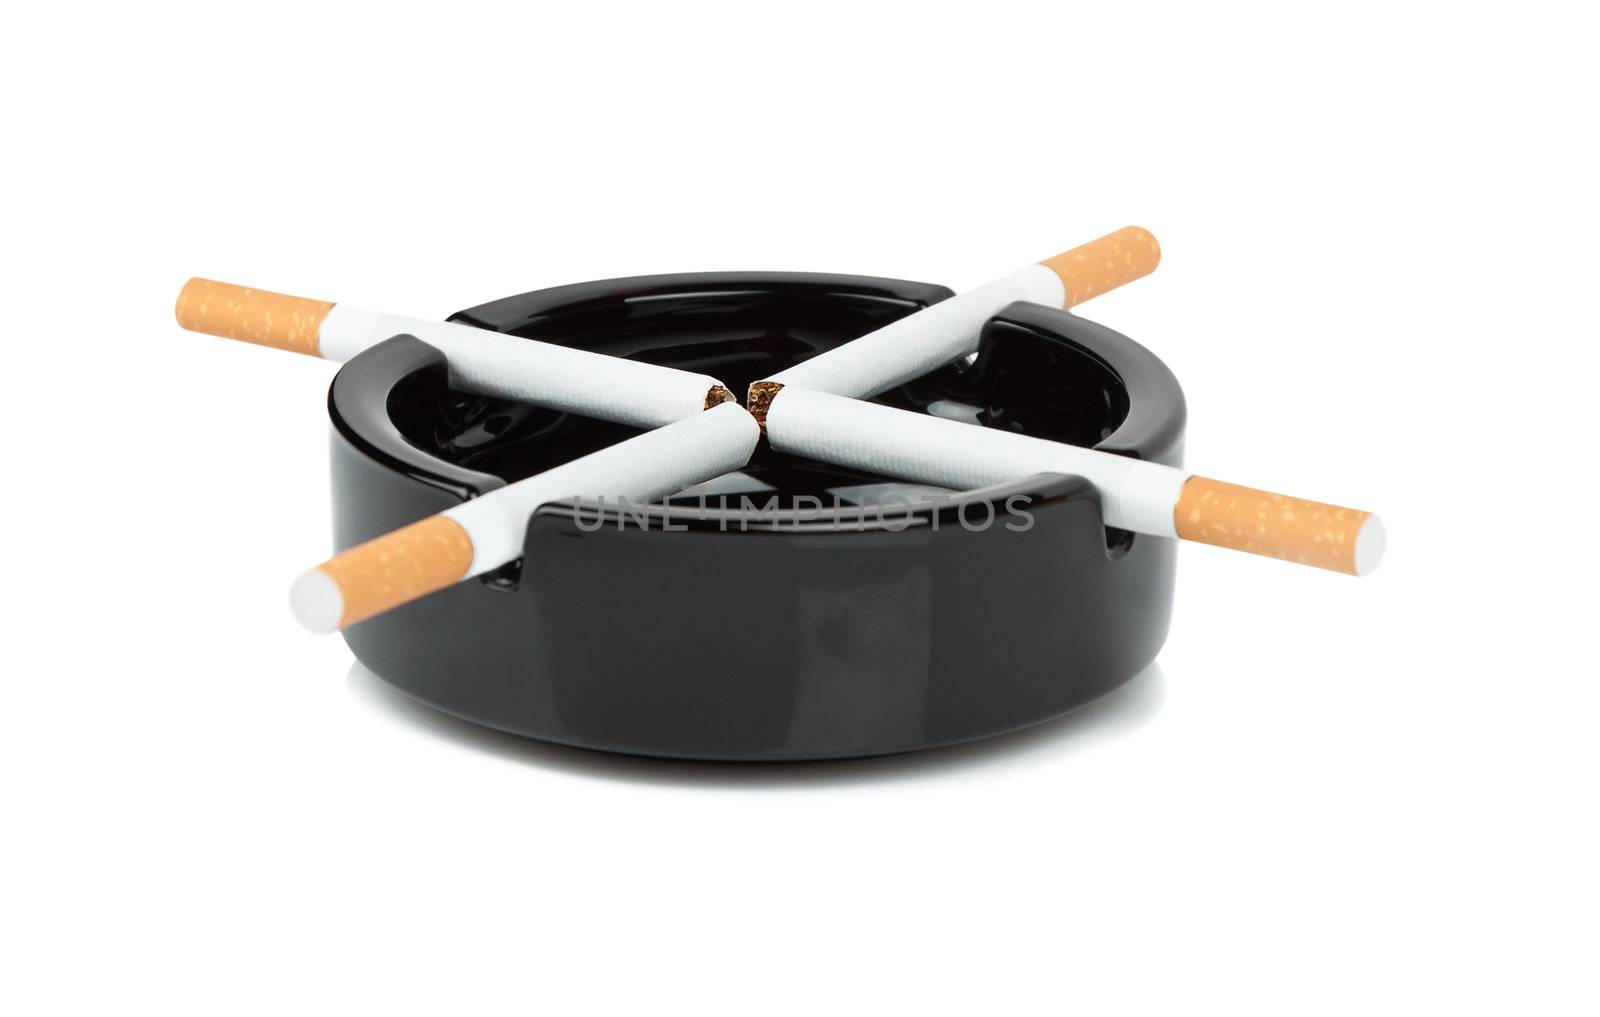 Cigarettes are a black ashtray on a white background